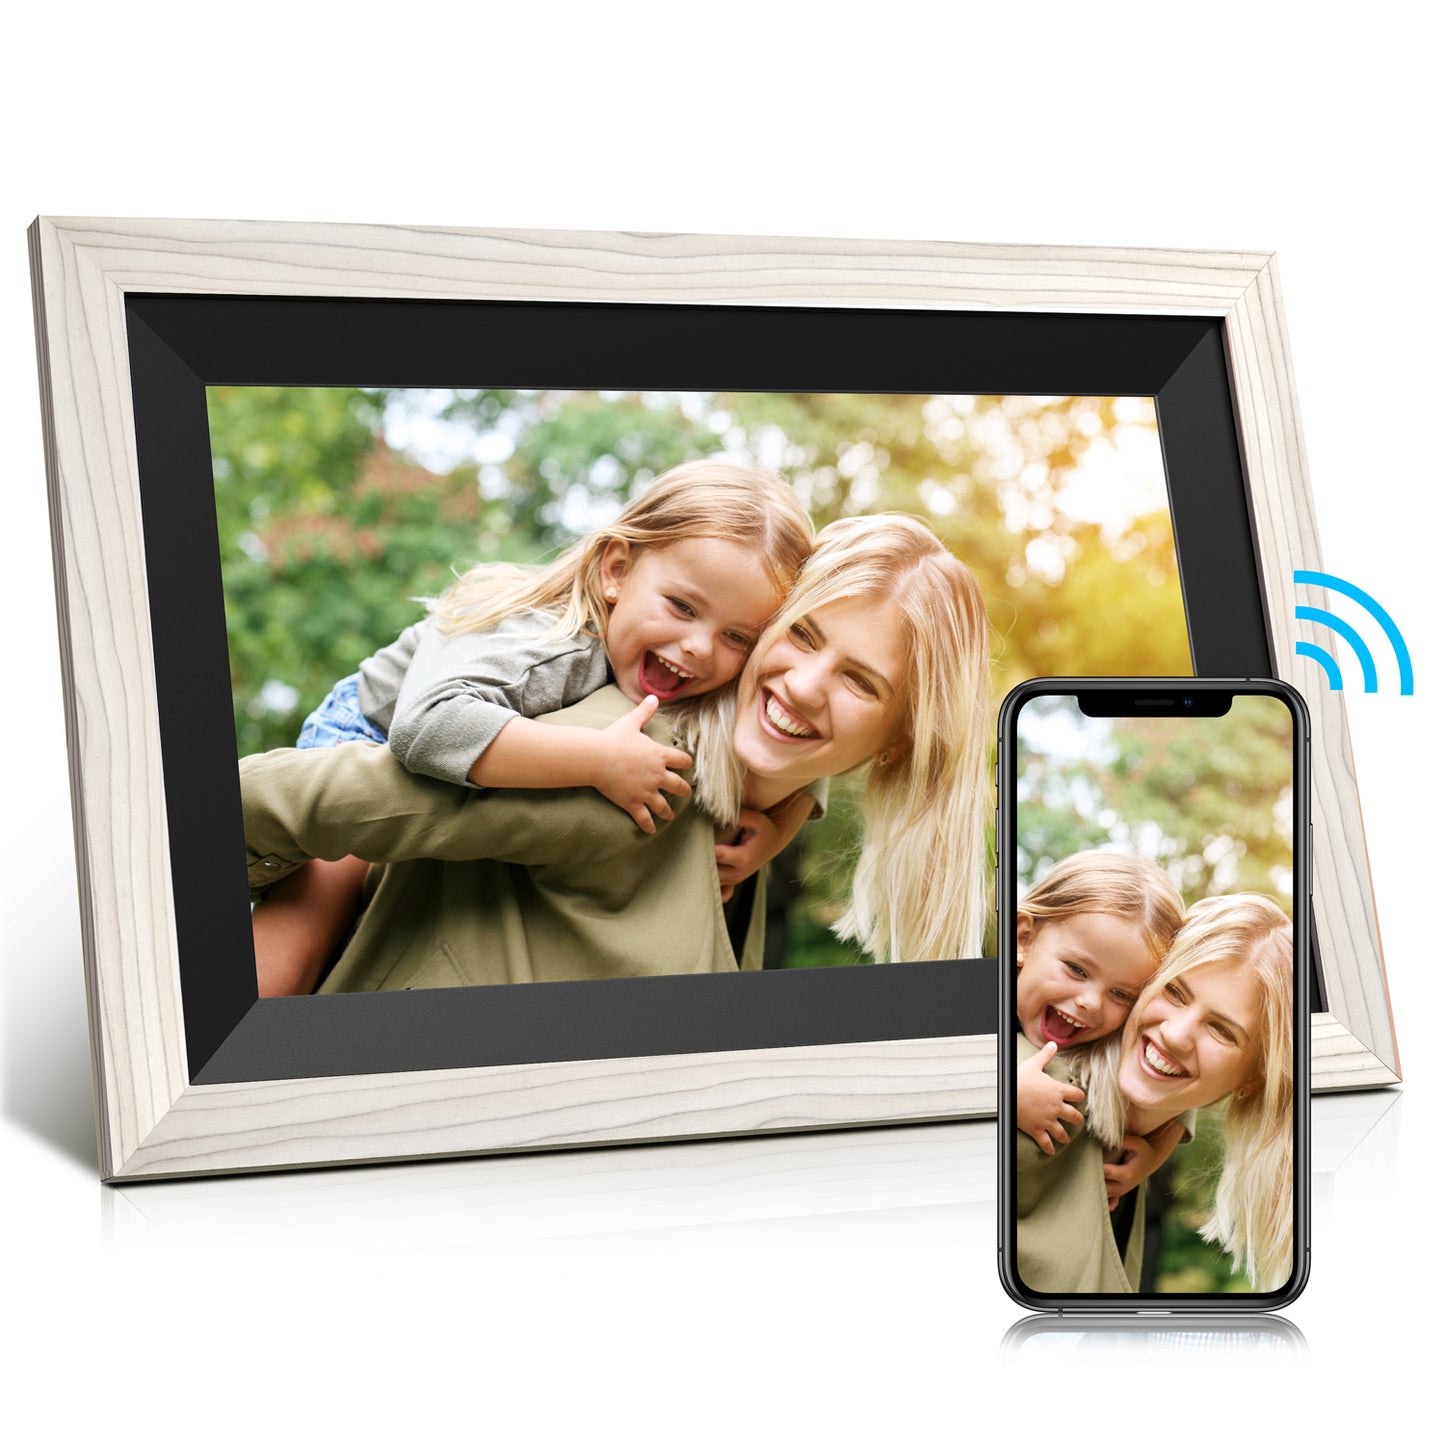 JEEMAK Smart Digital Picture Photo Frame Wifi 10" HD IPS Touch Screen 16GB Storage Auto-Rotate Adjustable Brightness Easy Setup